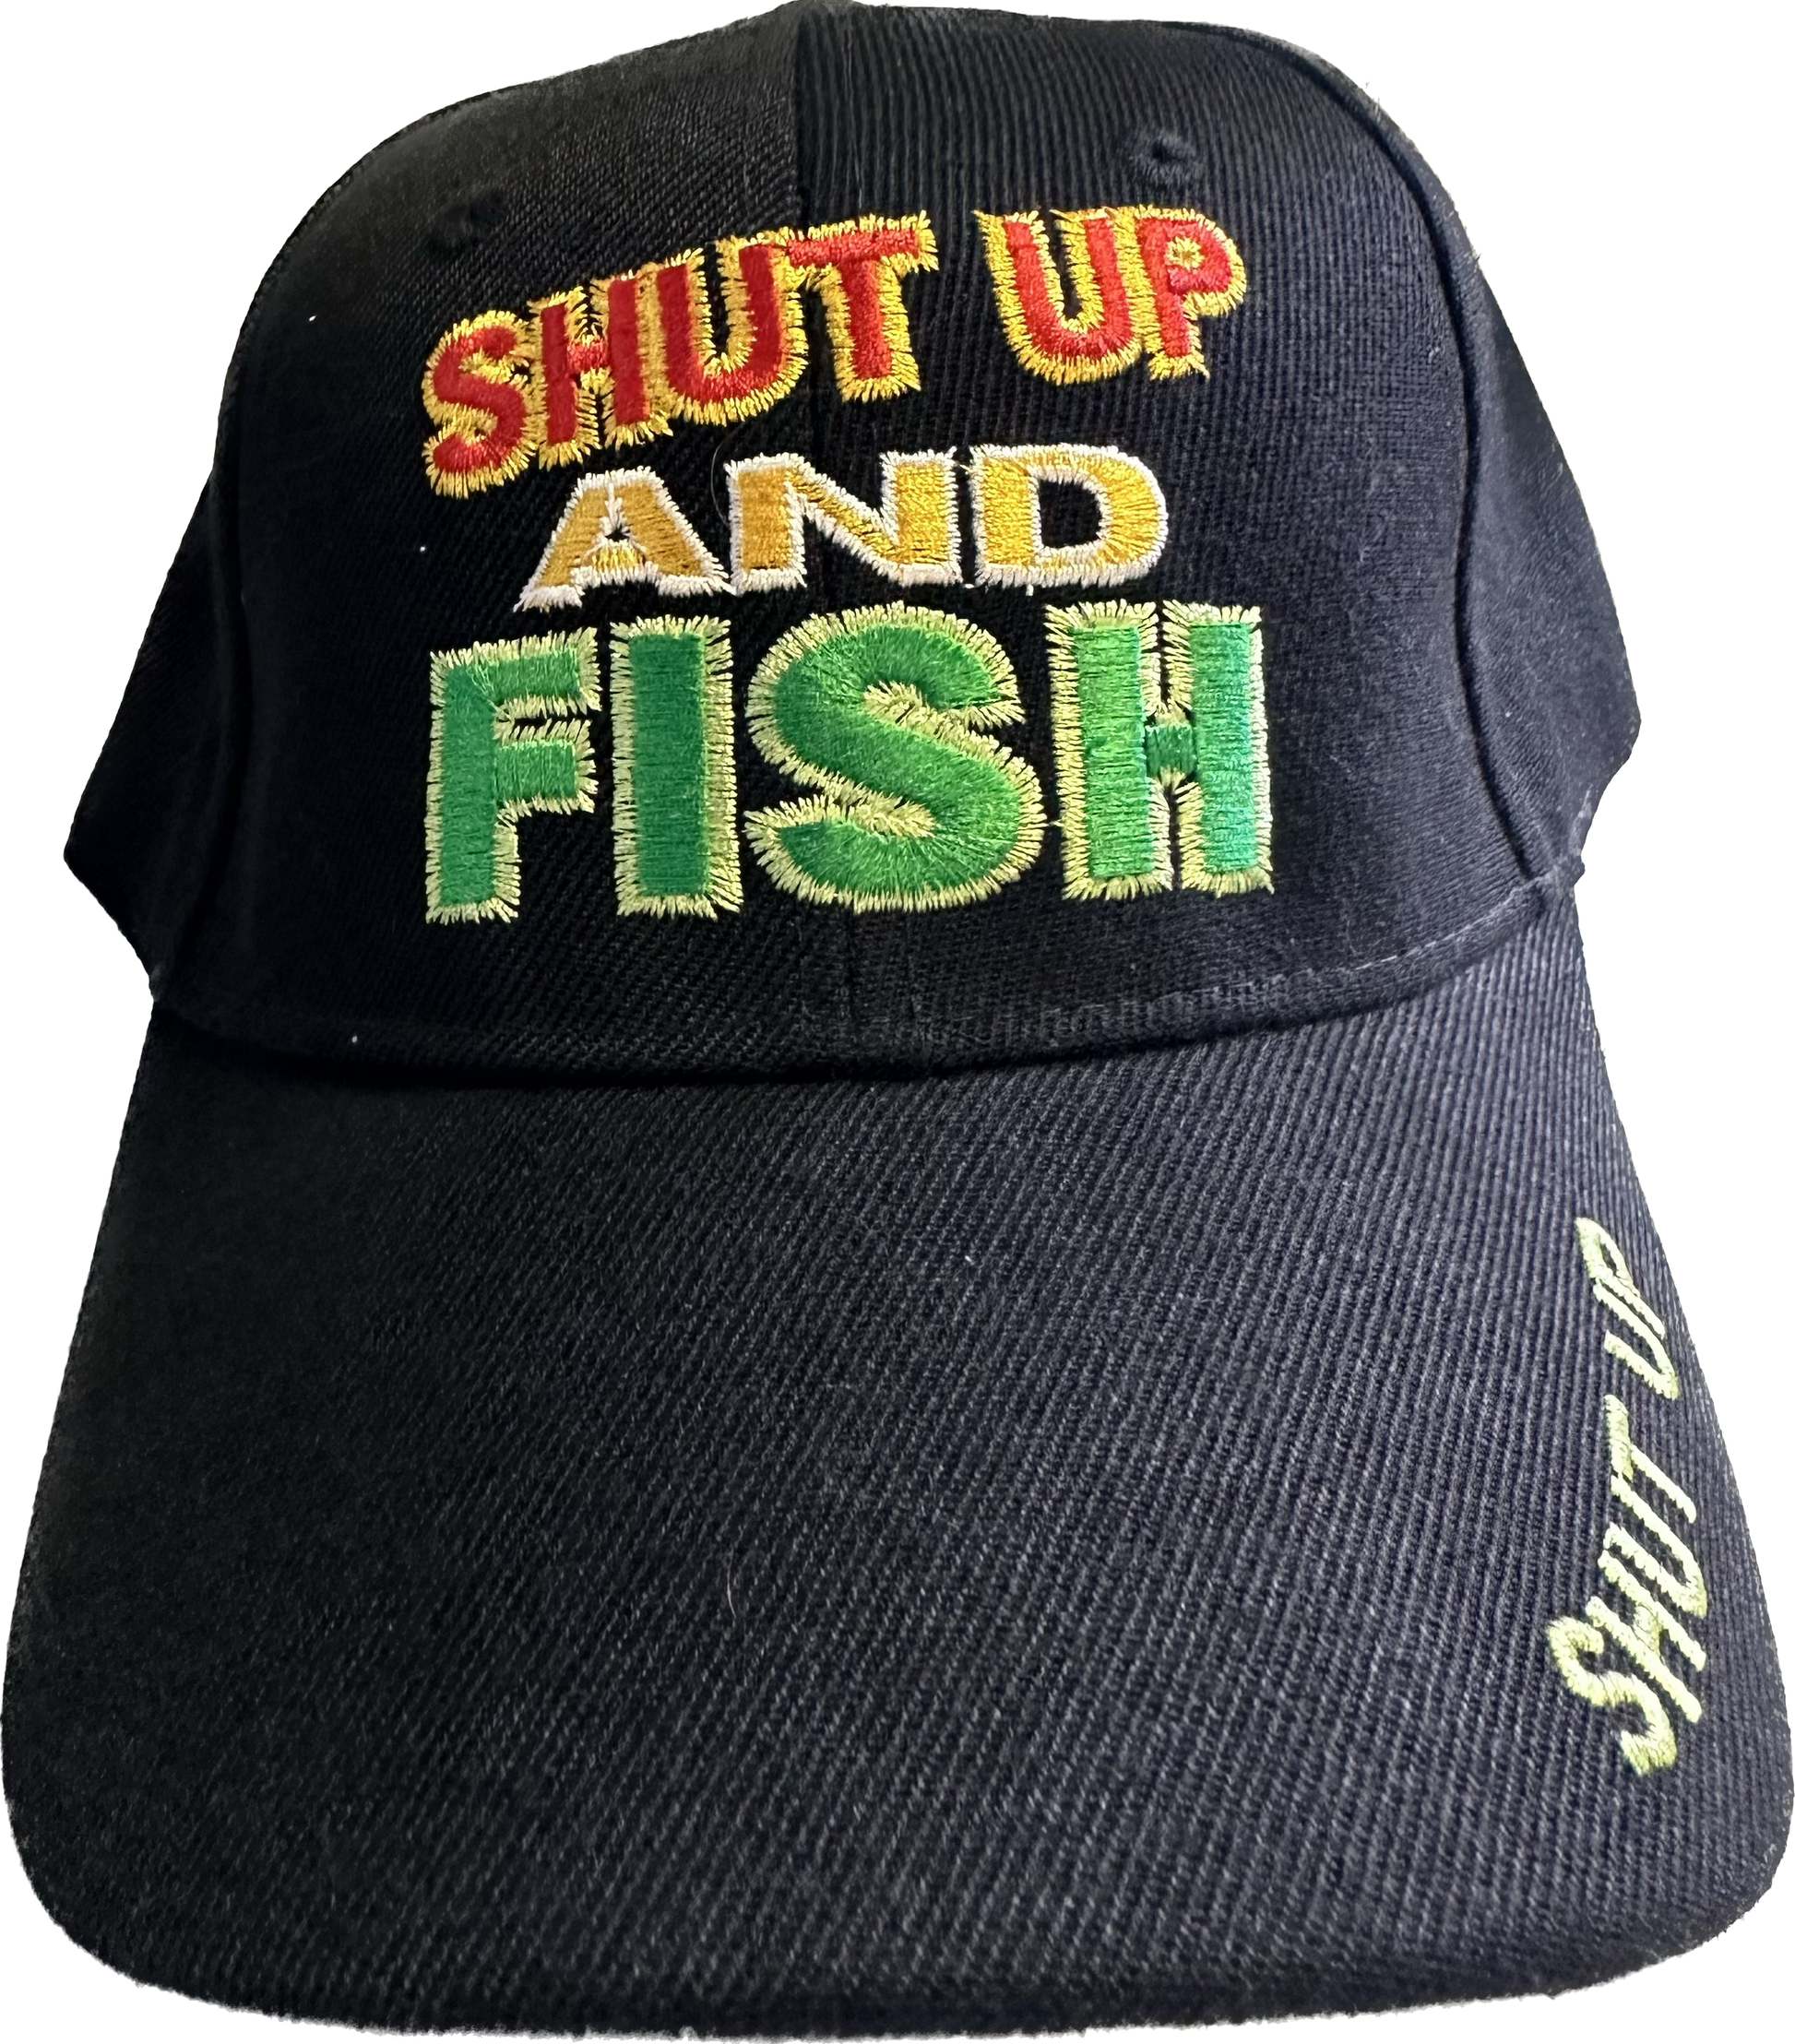 Black Shut Up And Fish Hat